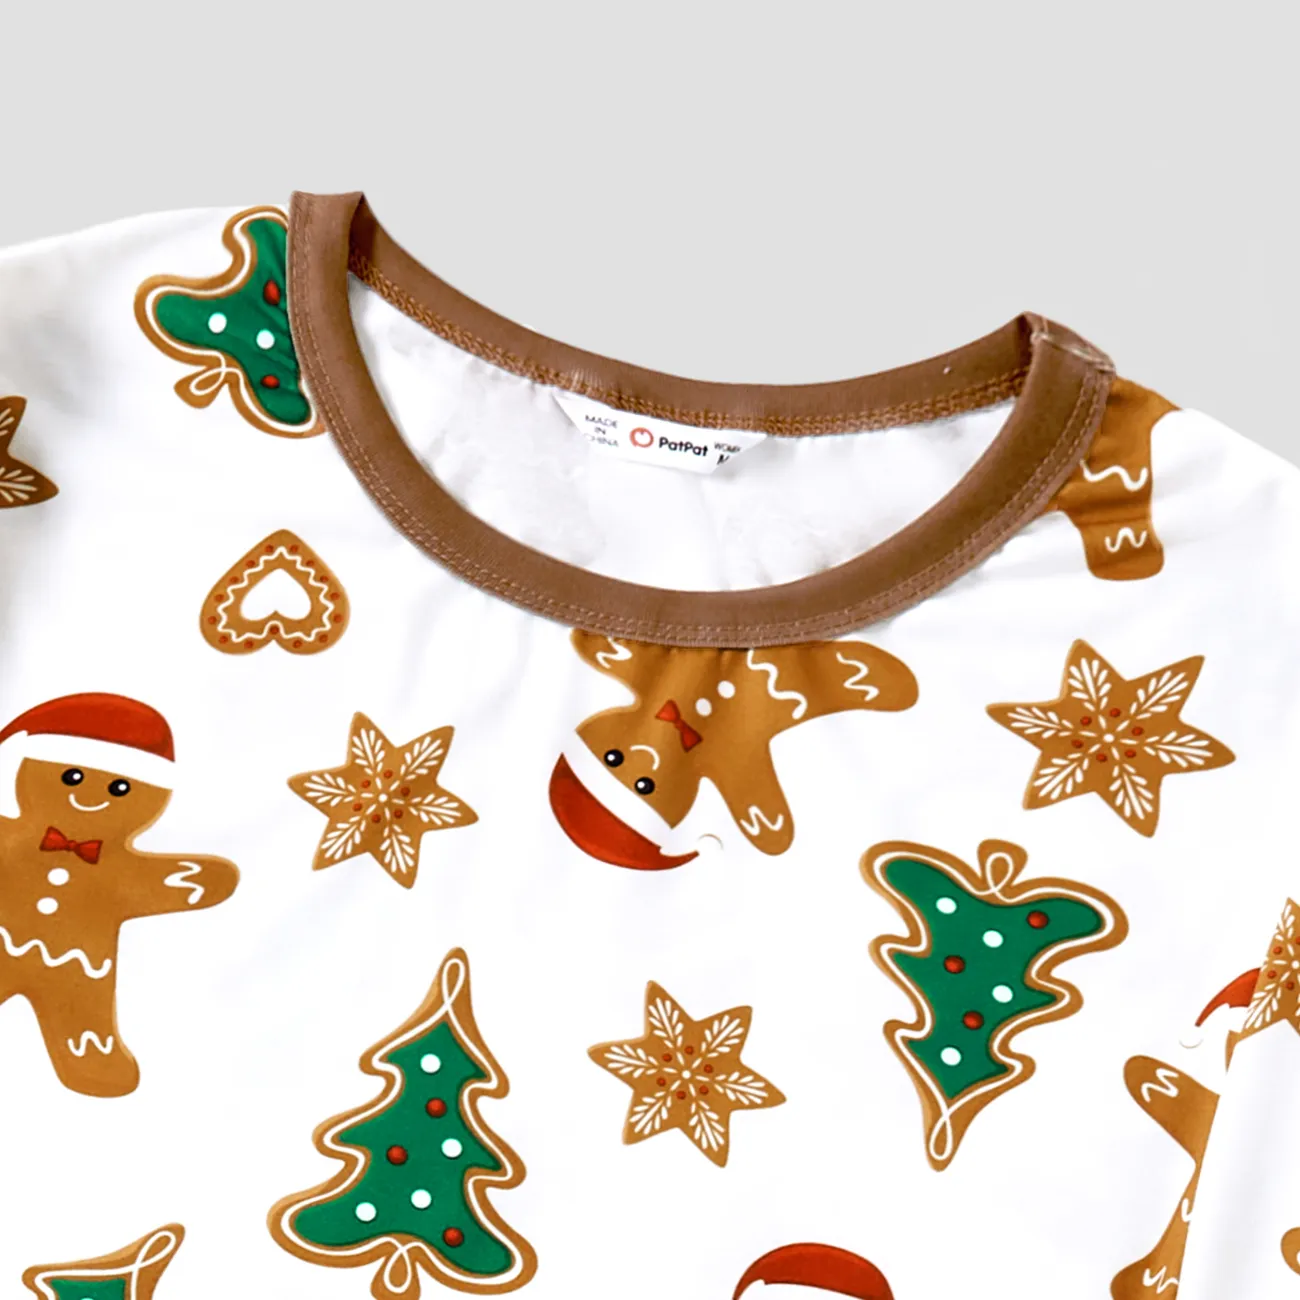 Christmas Family Matching Cartoon Gingerbread Man and Tree All-over Print Long-sleeve Pajamas Sets(Flame resistant) Coffee big image 1